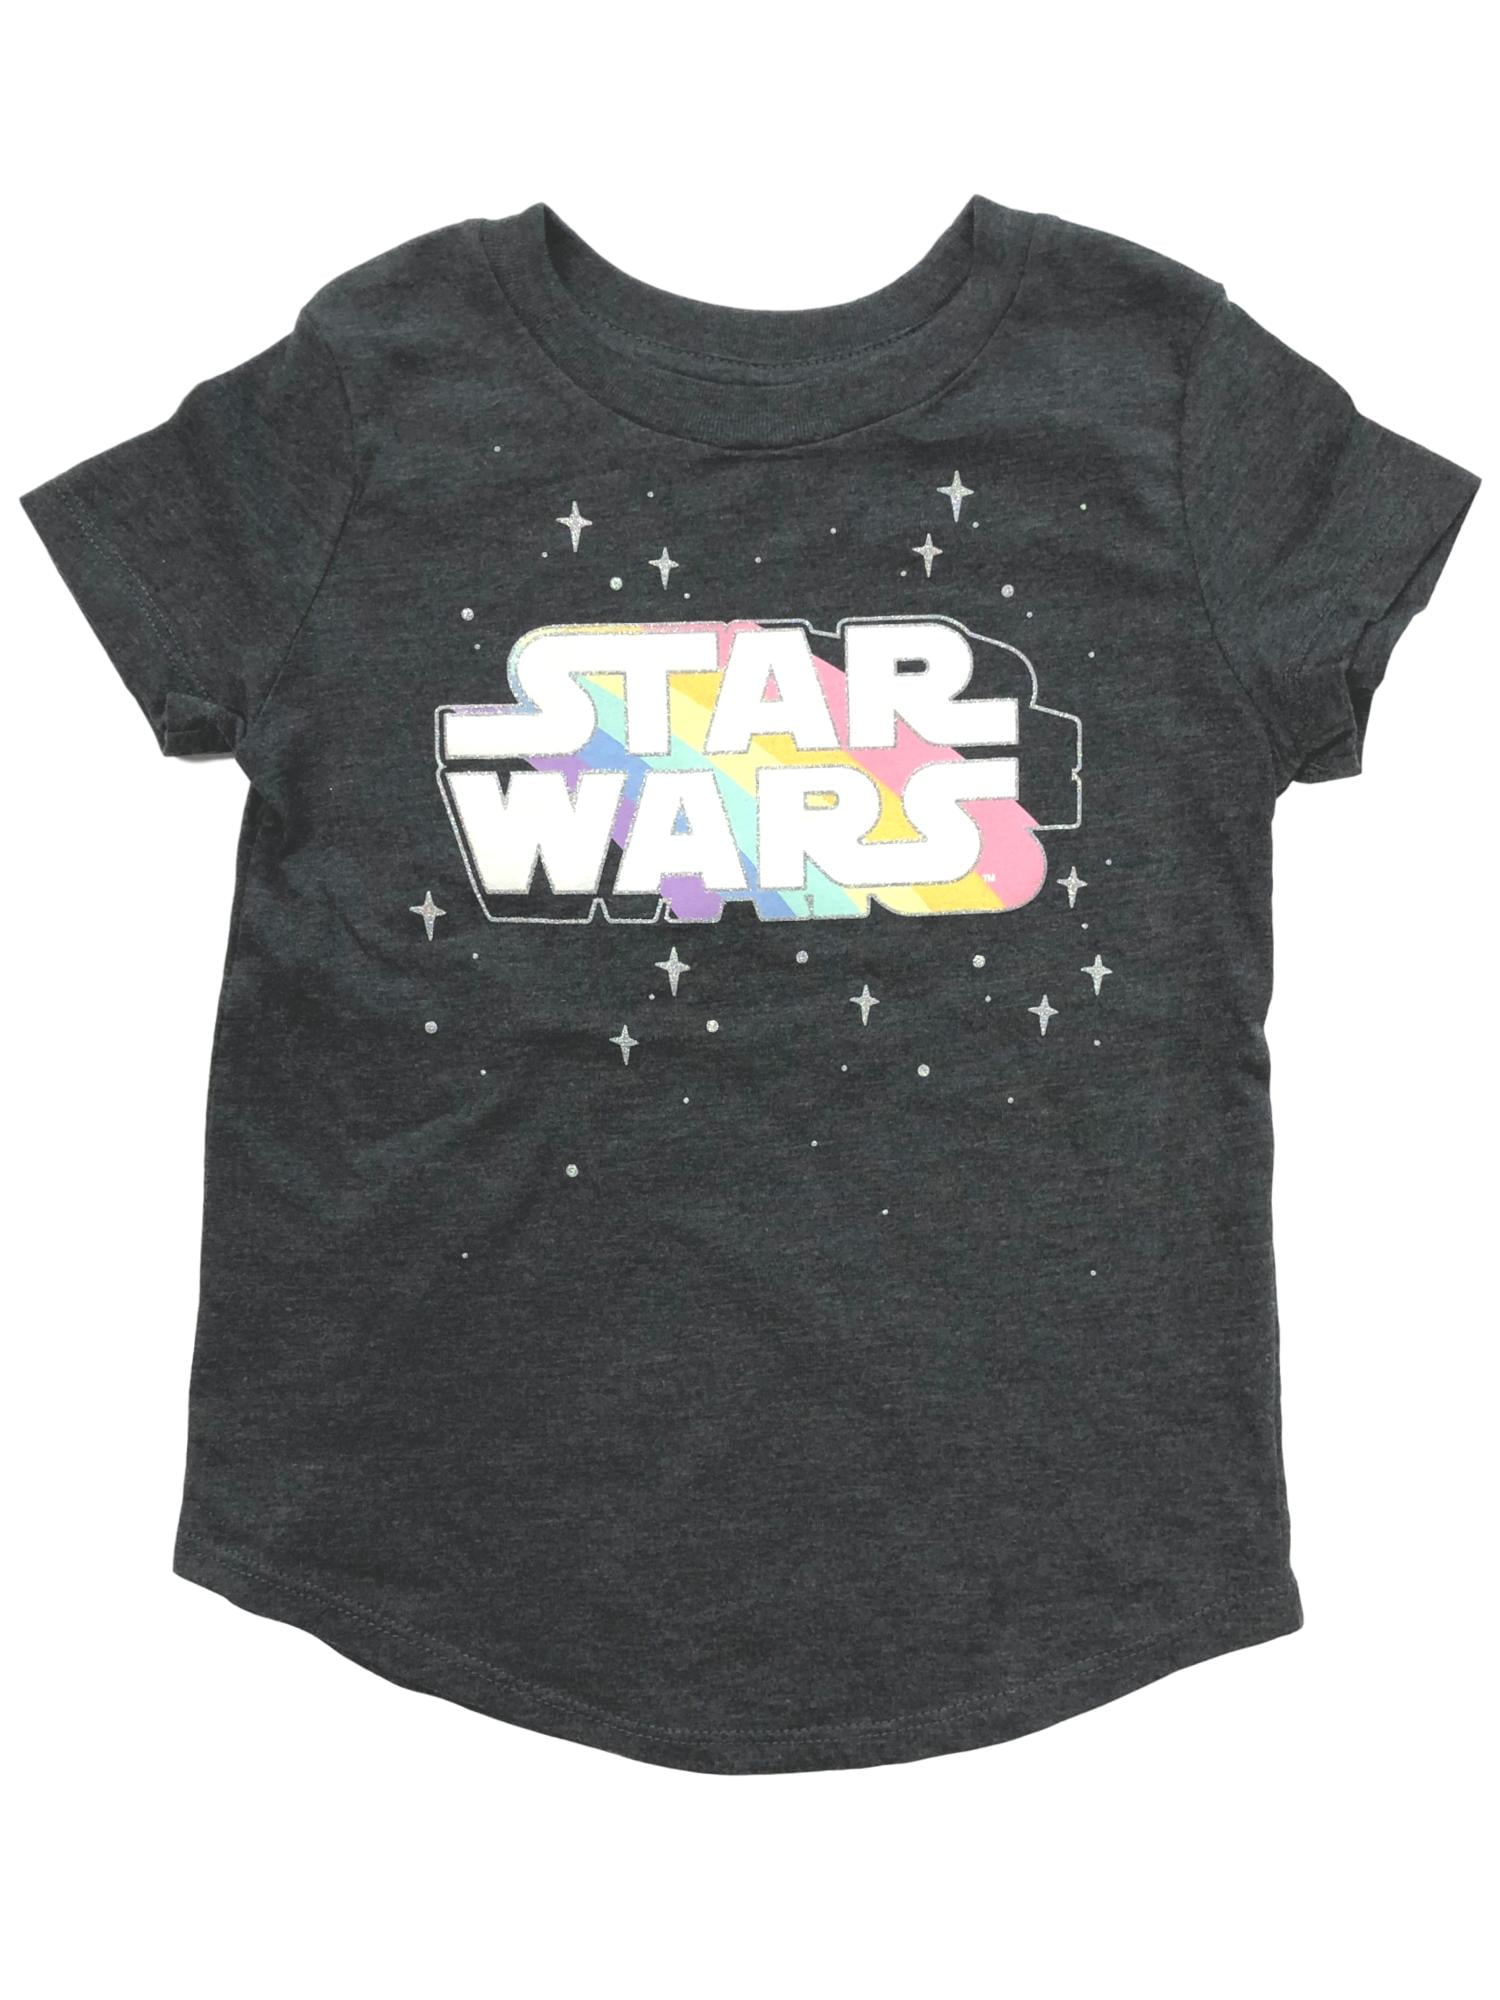 Star Wars Girls T-Shirt 